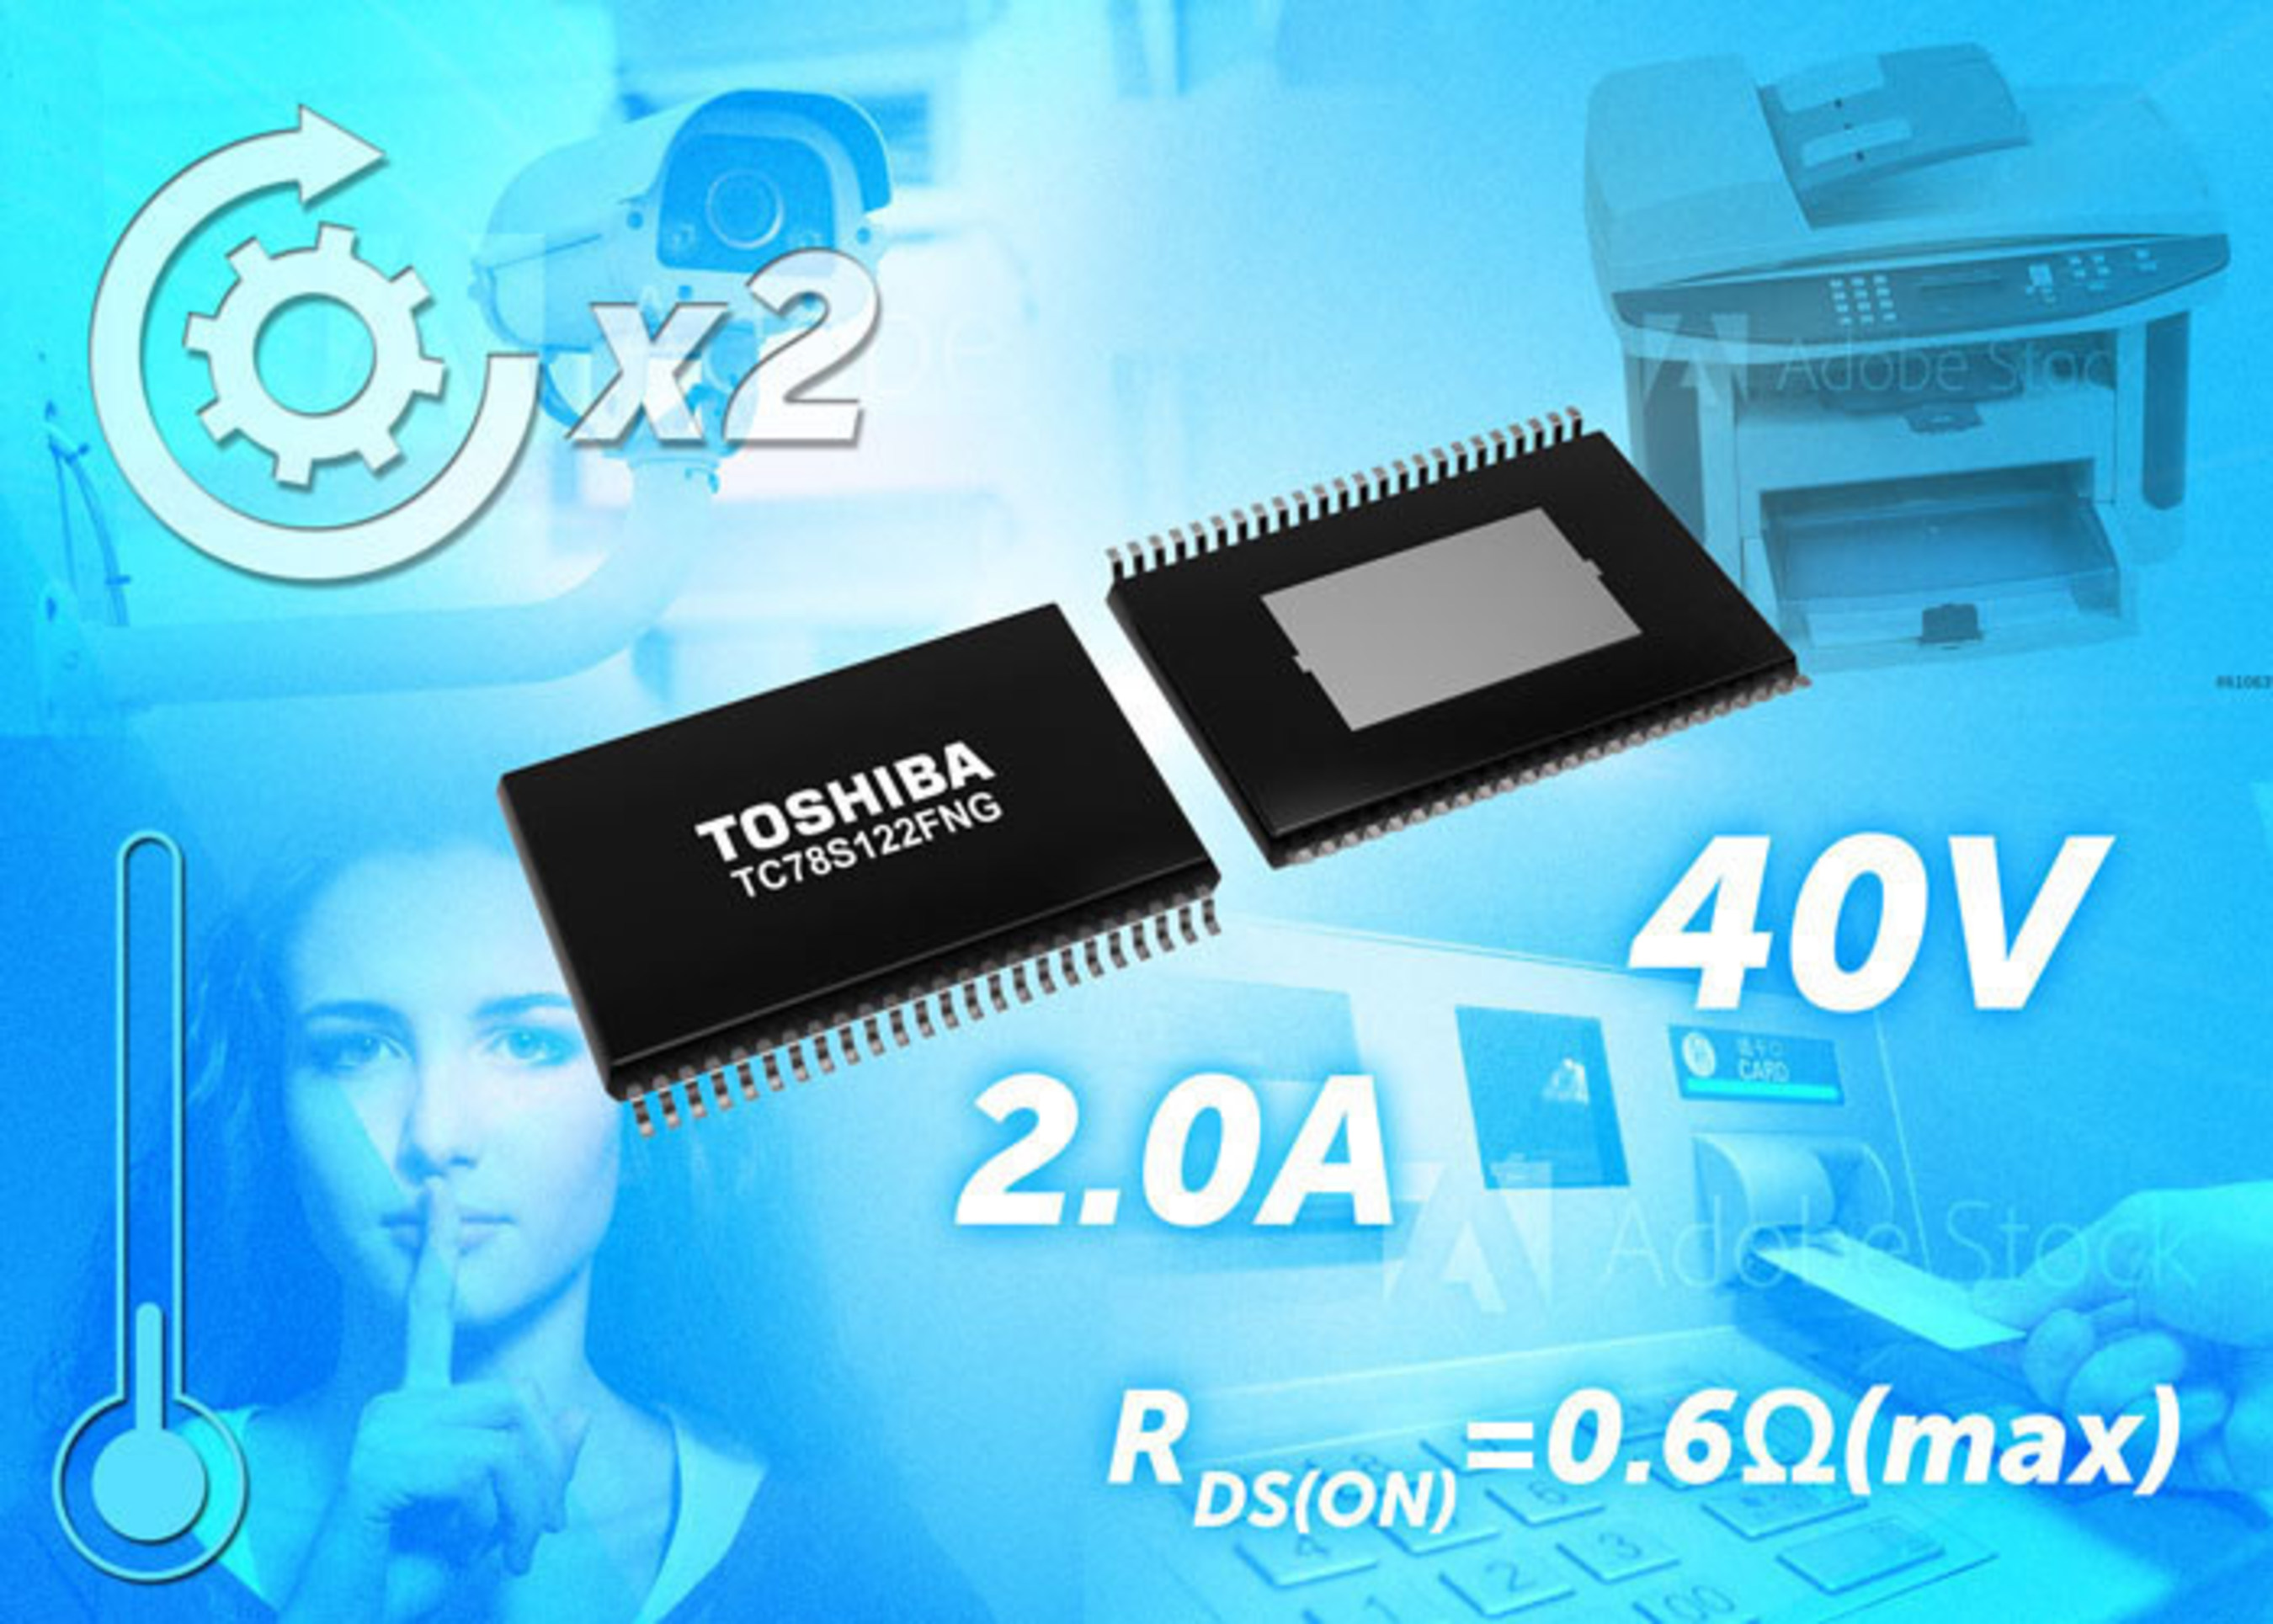 Toshiba's new TC78S122FNG multi-configurable bipolar stepping motor driver operates at 40V/2.0A maximum.